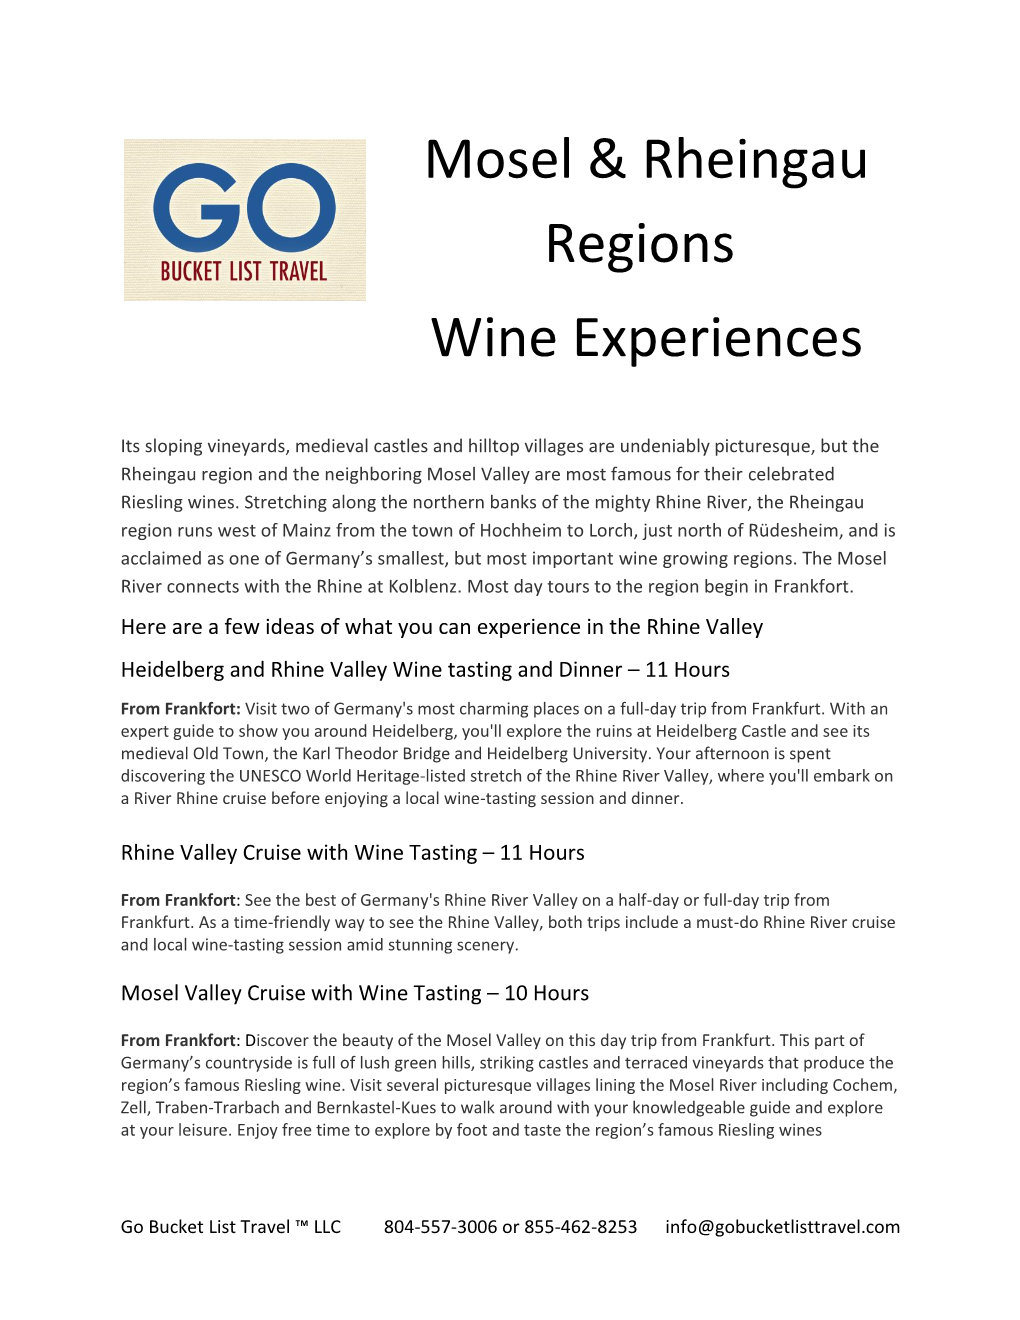 Mosel & Rheingau Regions Wine Experiences